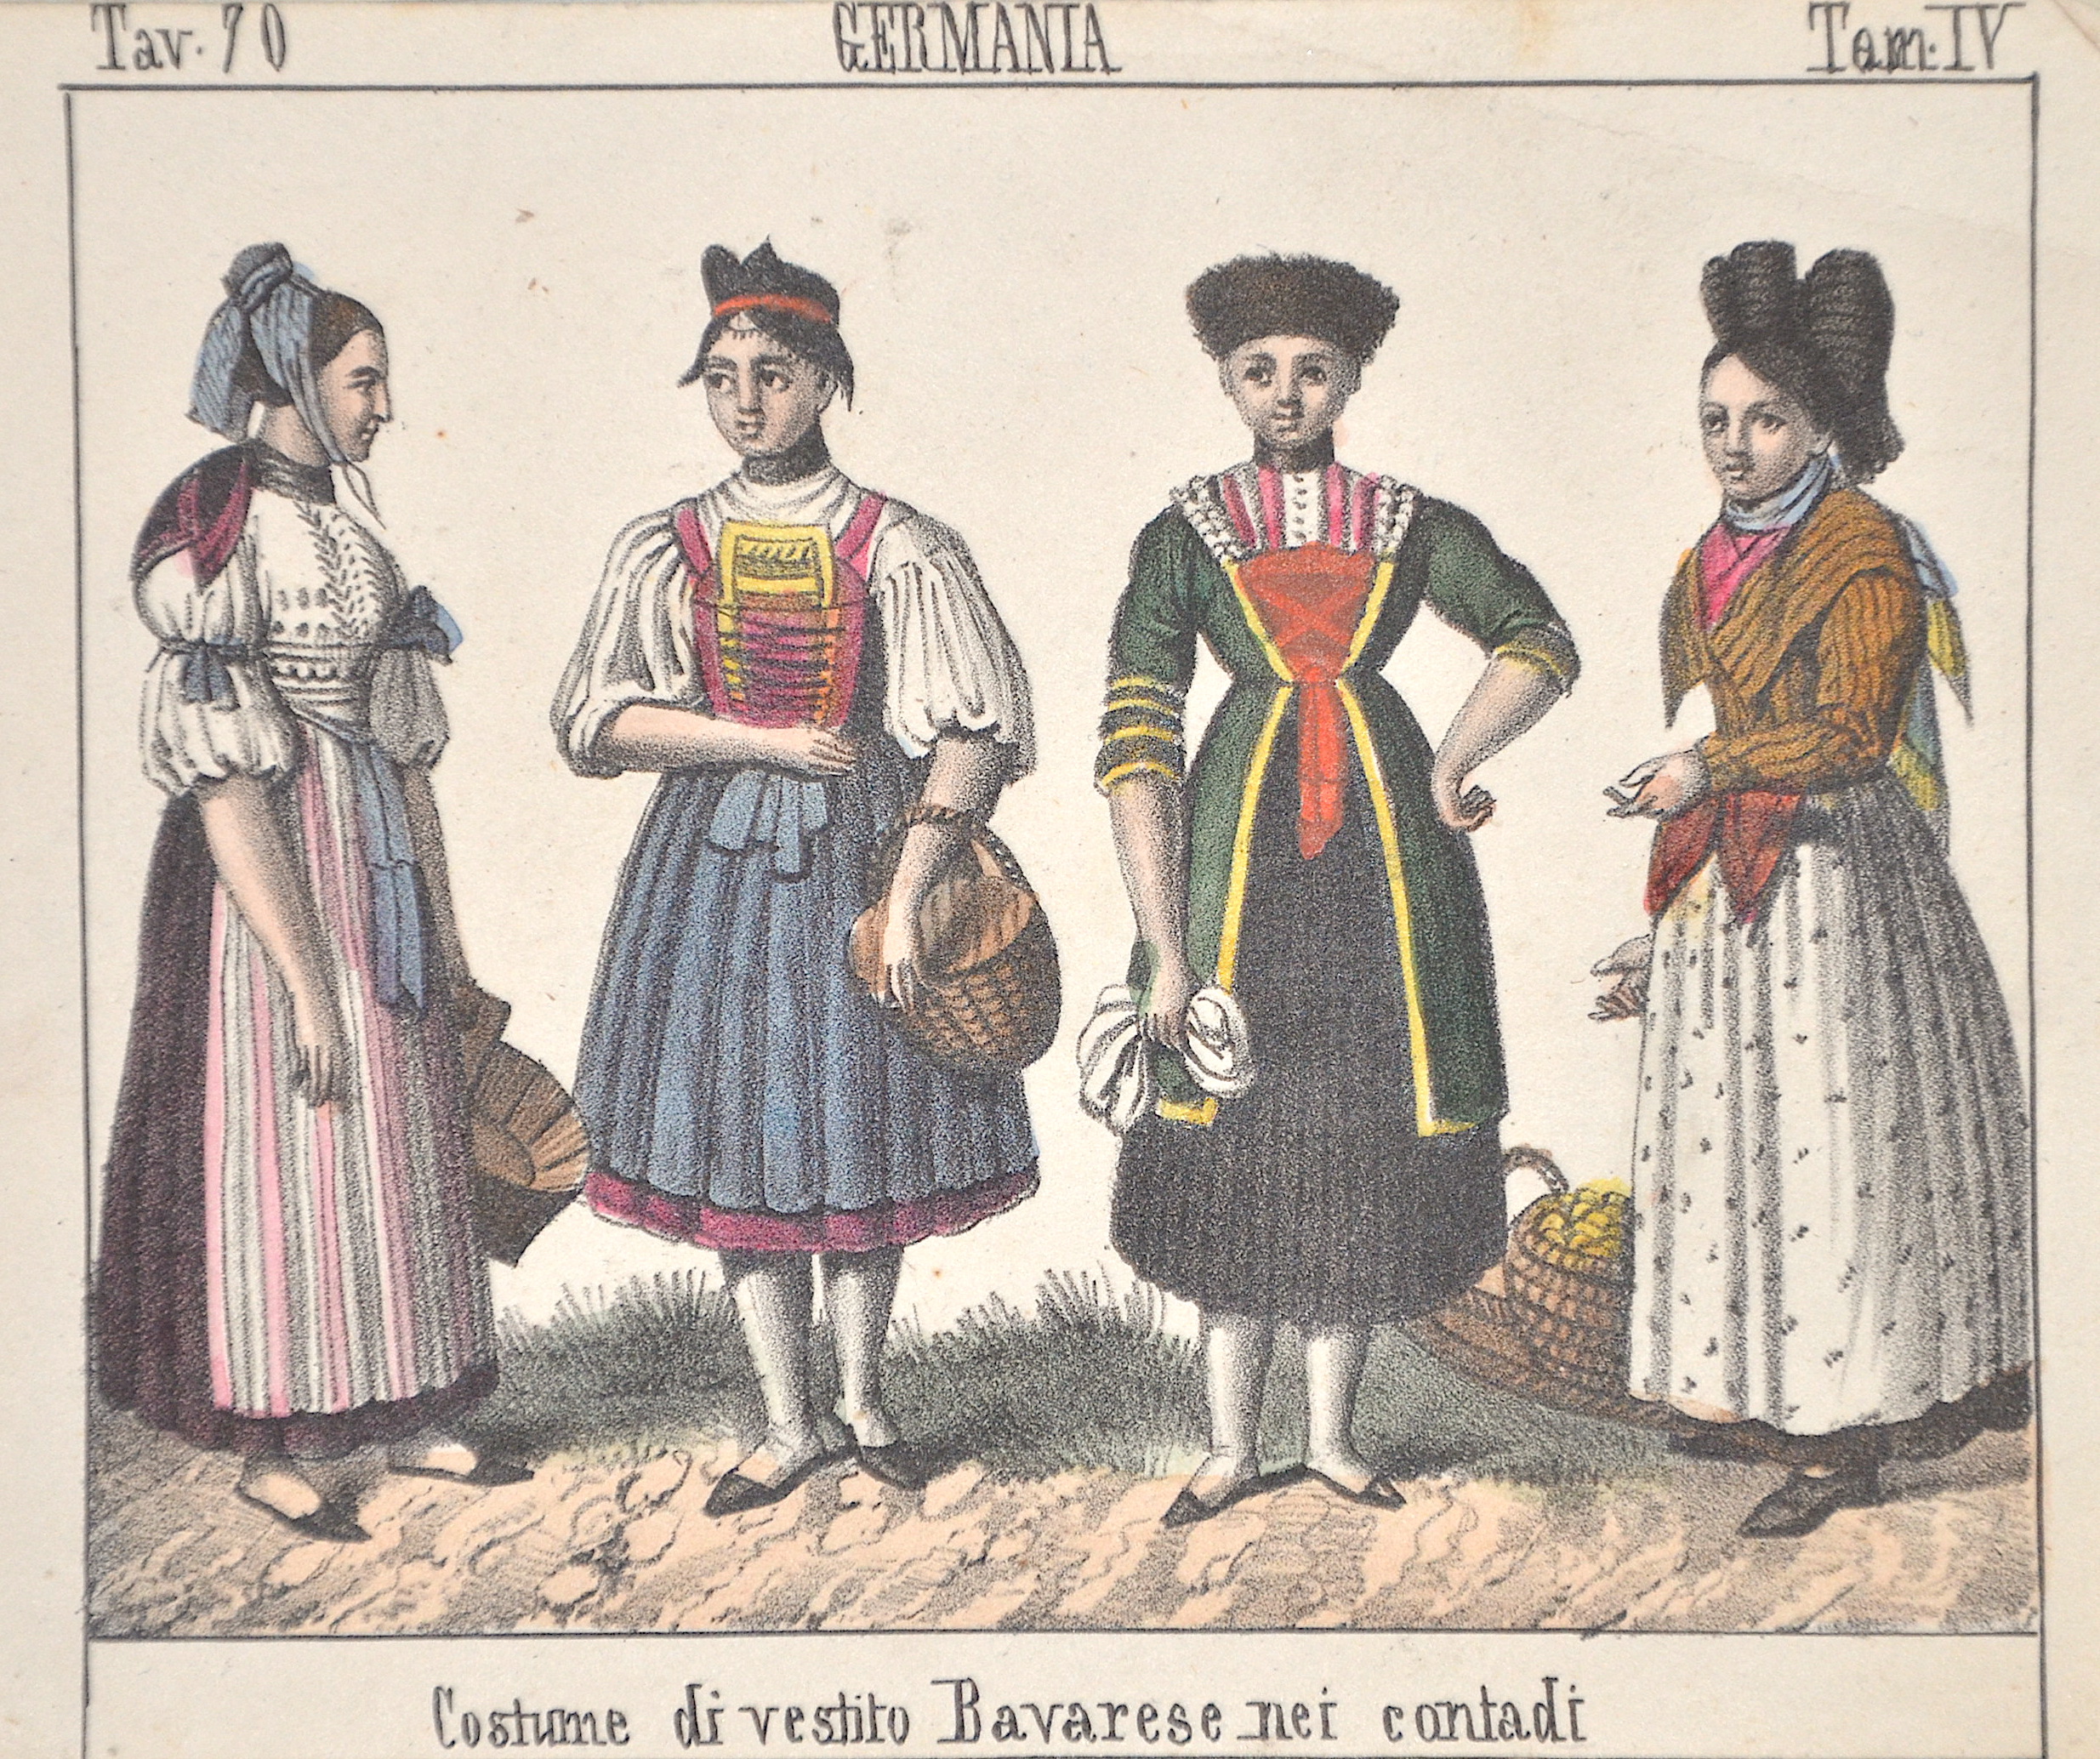 Anonymus  Tav. Z70 / Germania / Tom IV / Costume di vestito Bavarese nei contadi